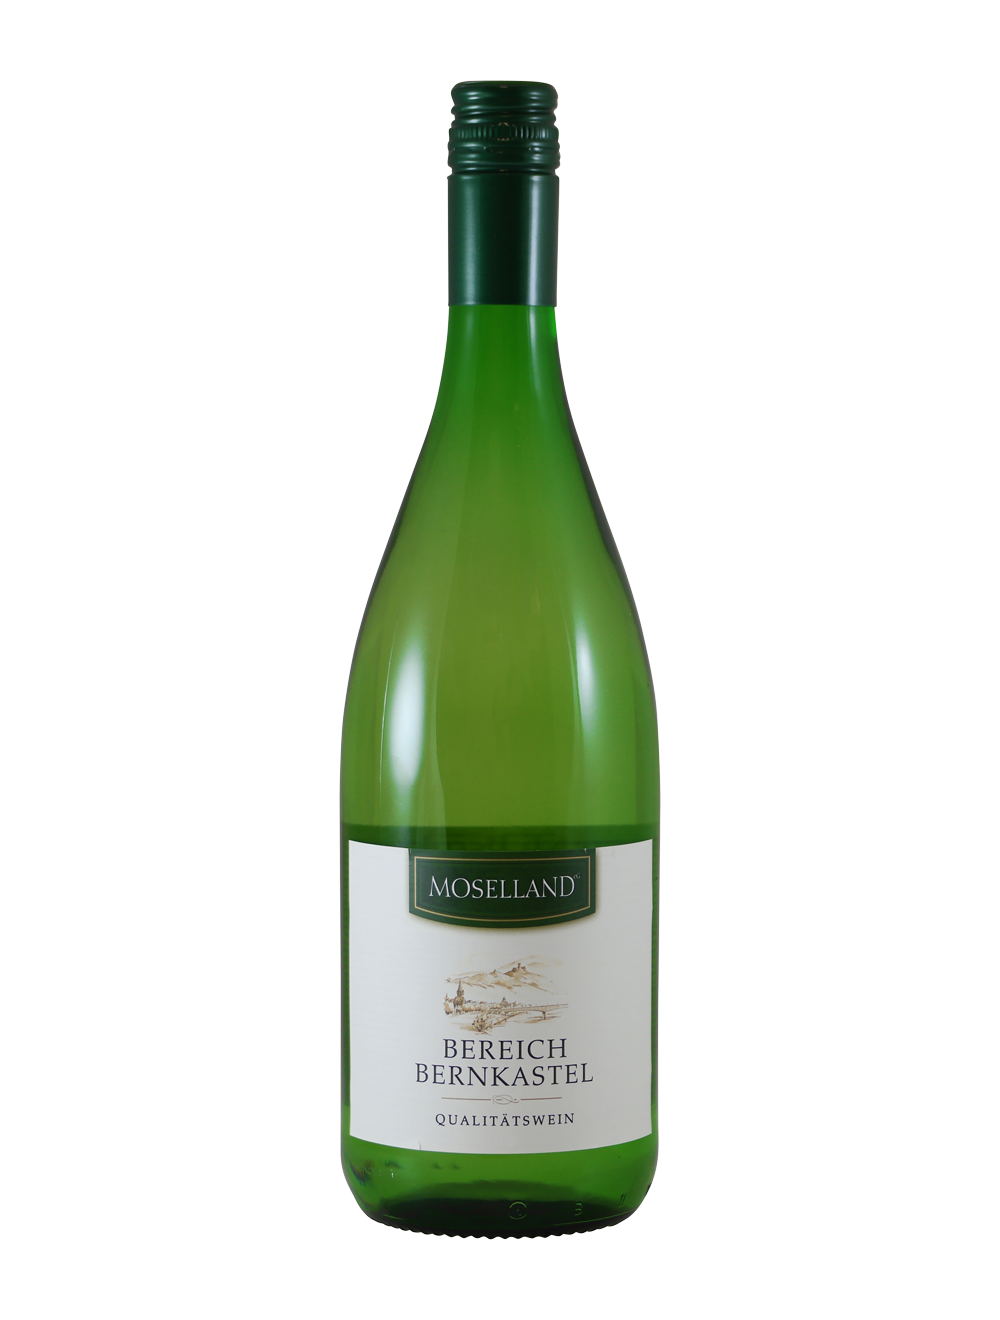 Delegeren Onnauwkeurig Onveilig Moselland Bereich Bernkastel 1 liter licht zoete Duitse wijn | Voordelig  online witte wijnen bestellen